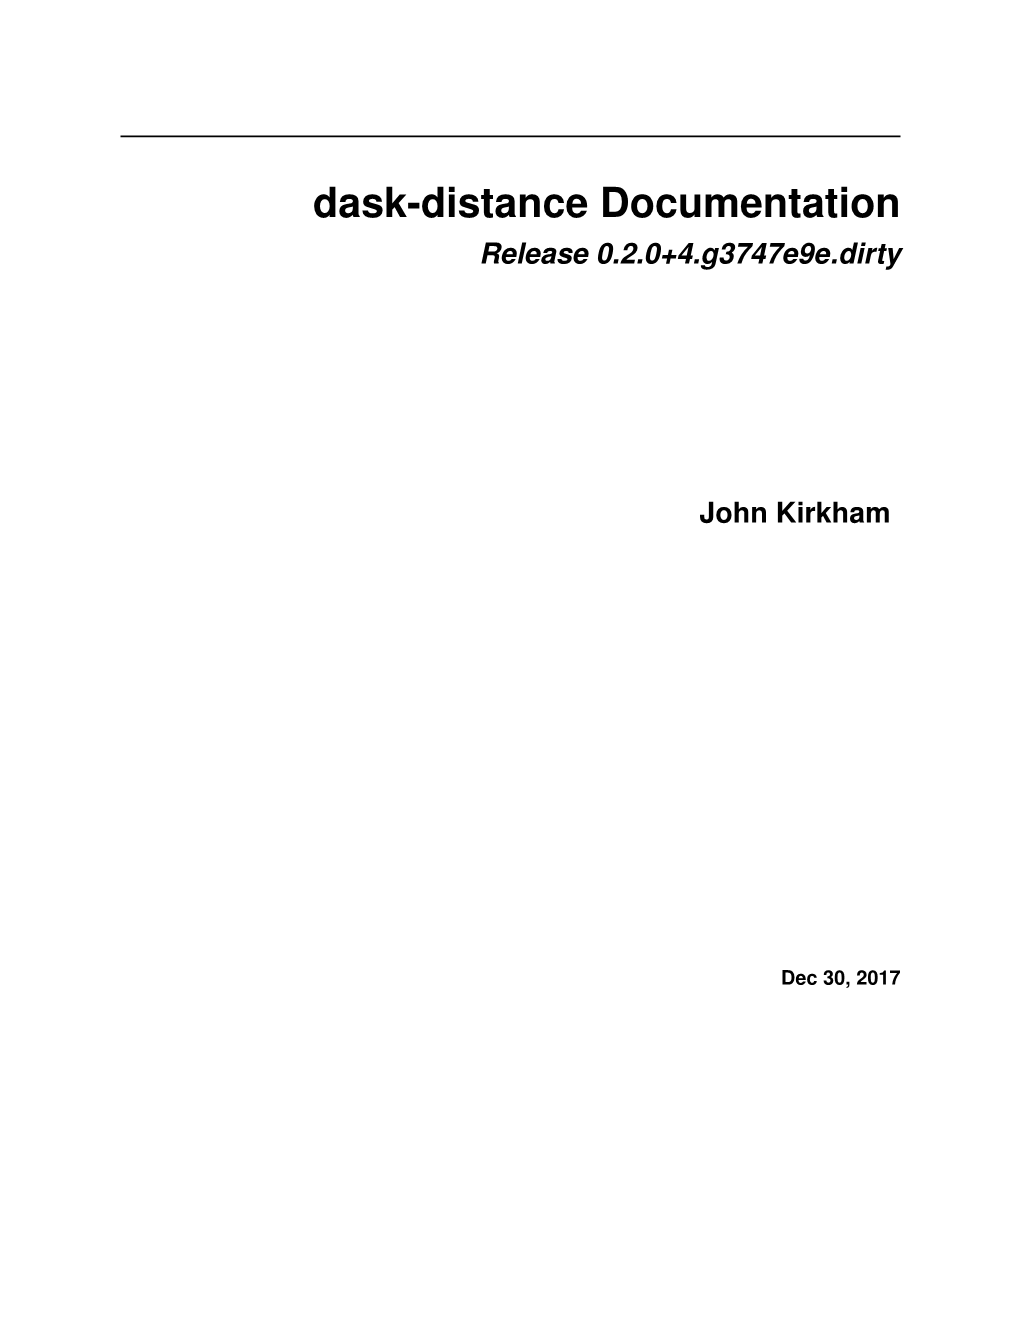 Dask-Distance Documentation Release 0.2.0+4.G3747e9e.Dirty